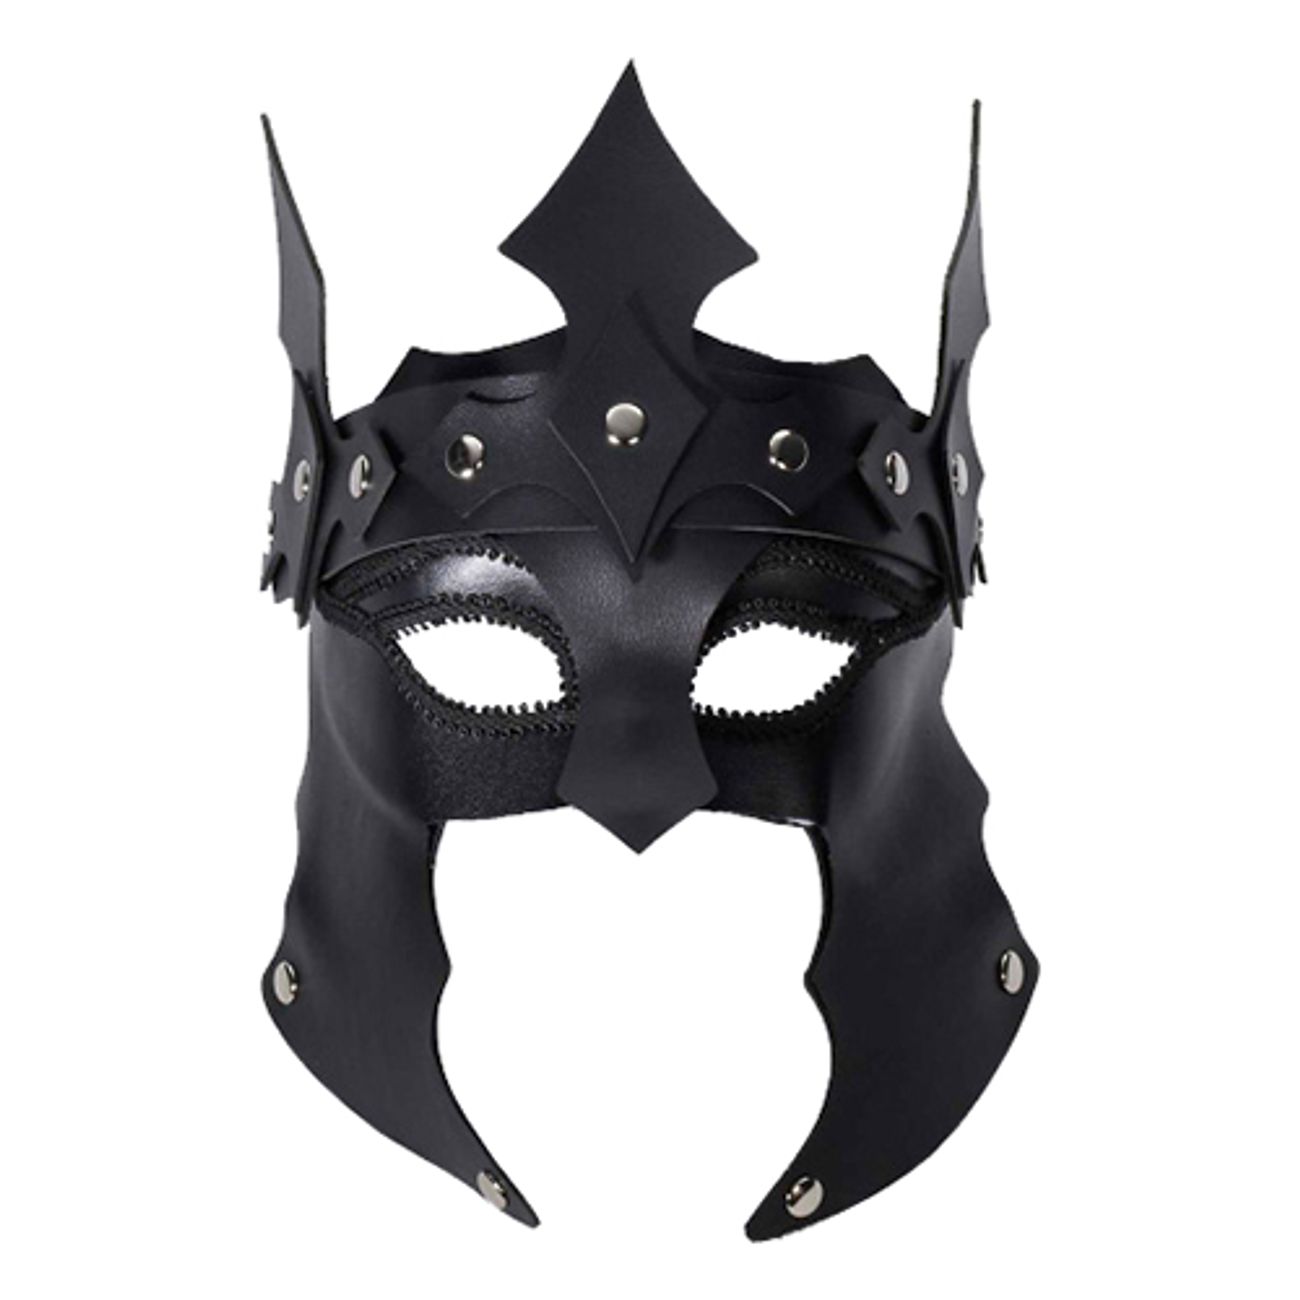 medeltids-mask-1